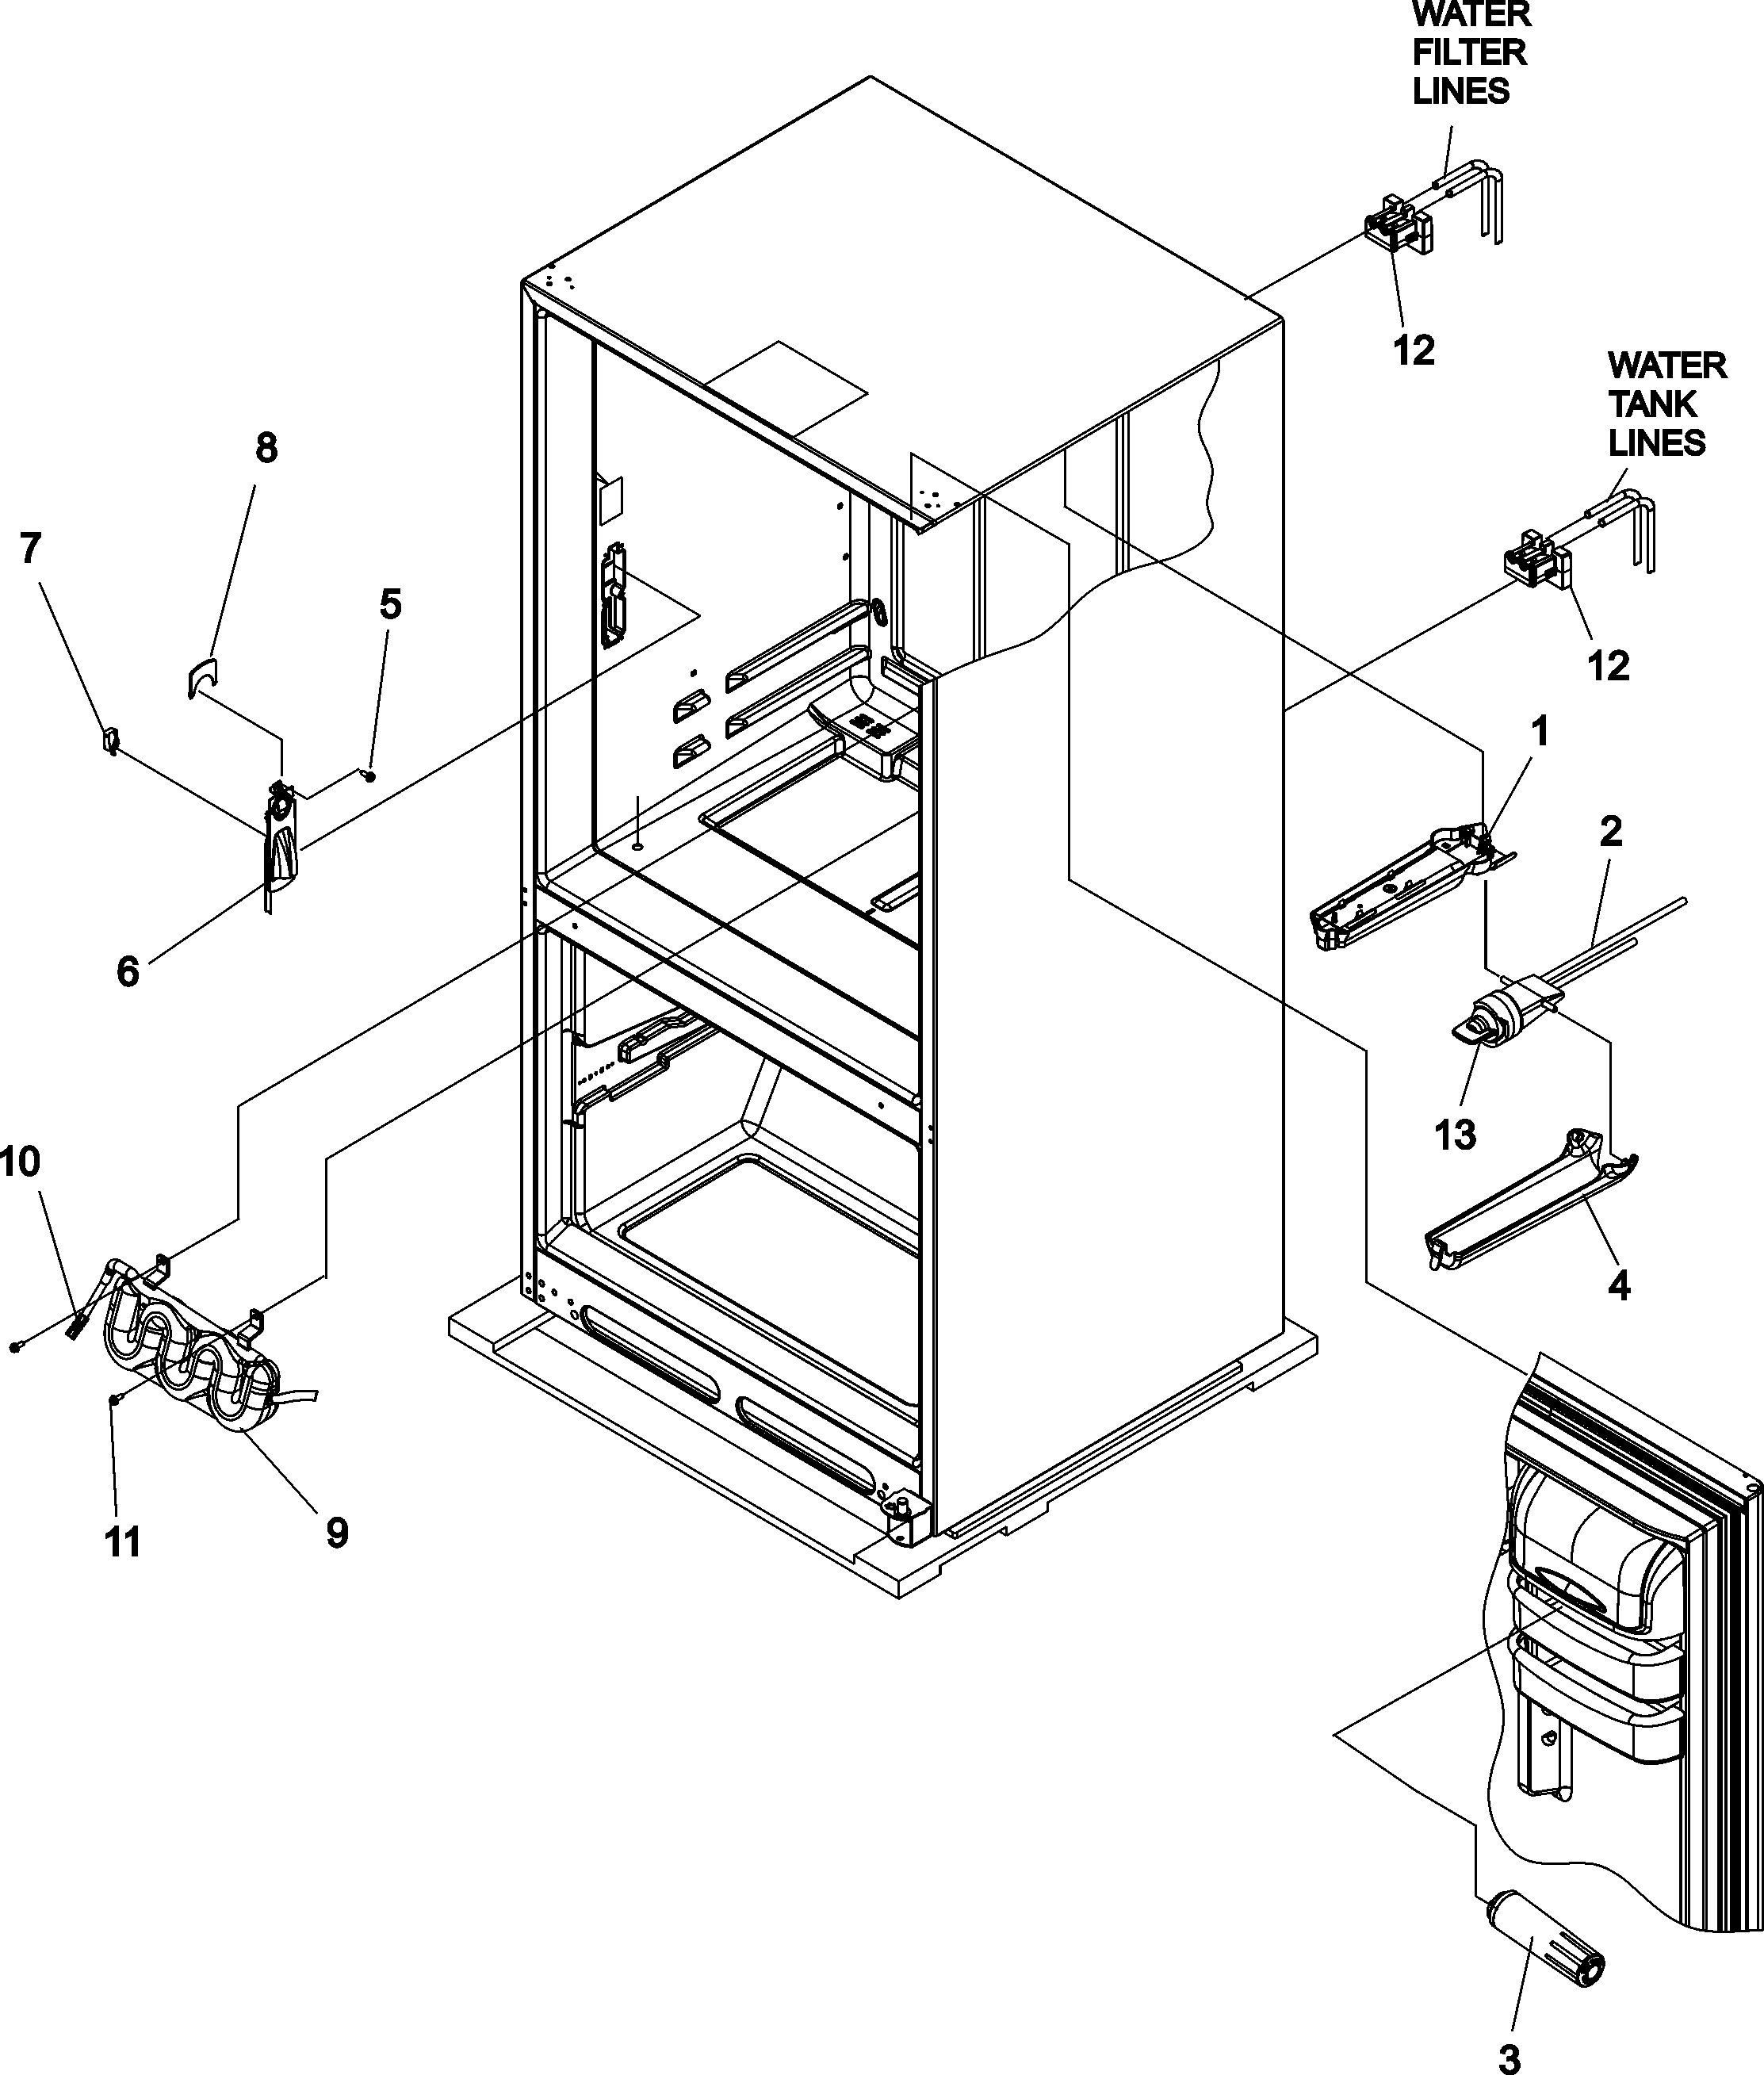 Refrigerator water filter diagram